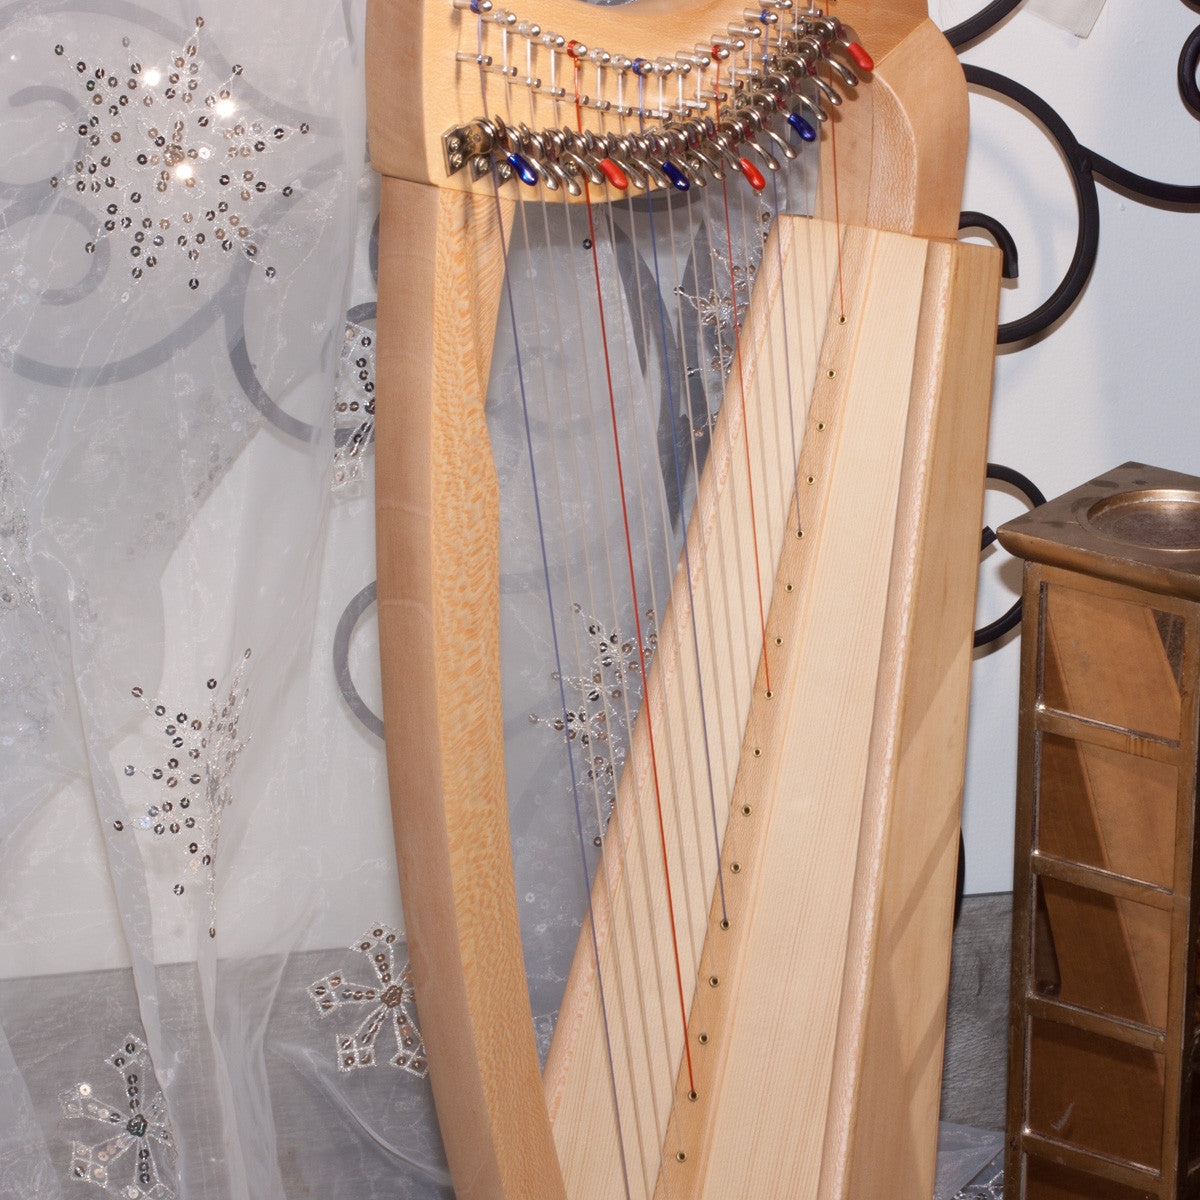 Roosebeck 19 String Beginner & Student Harp Lacewood